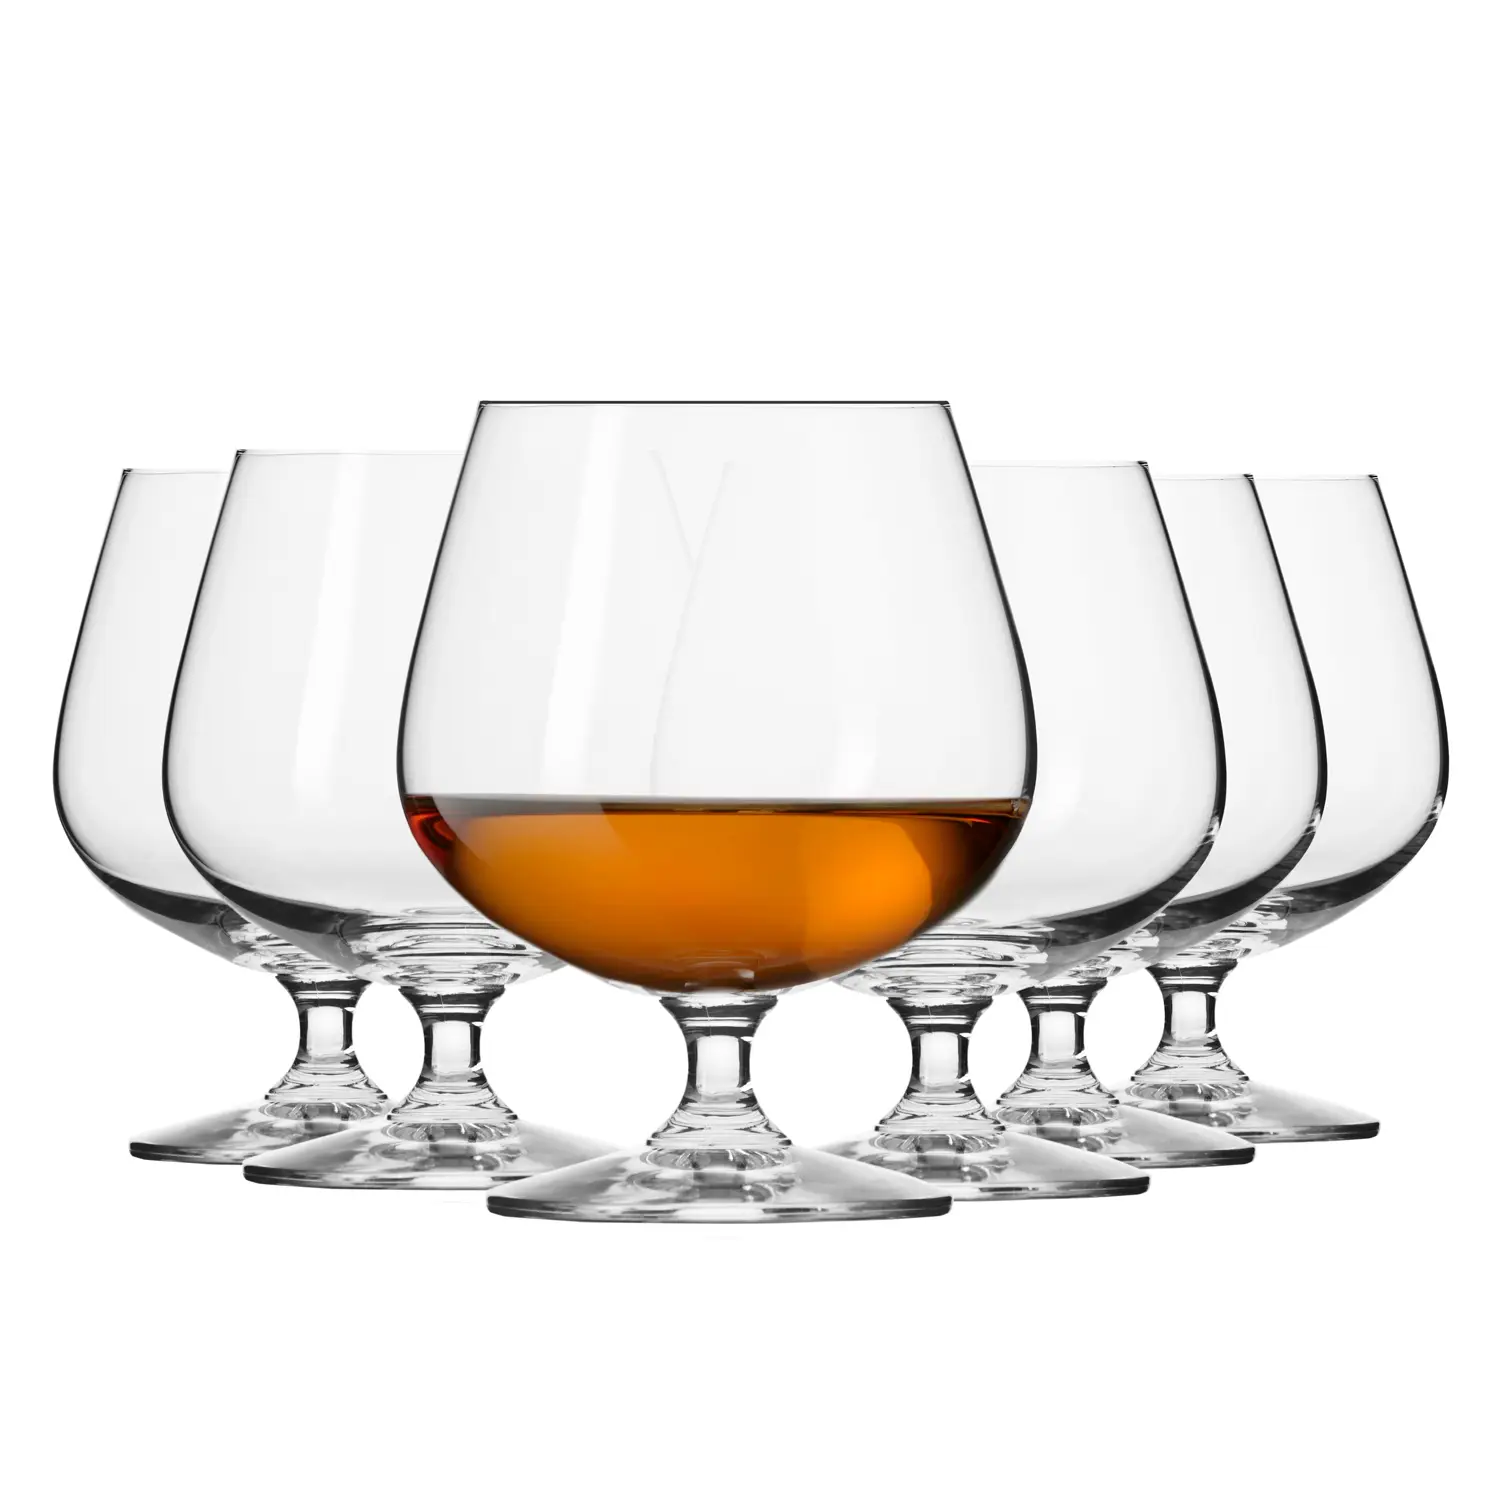 Krosno Balance Cognac Gl盲ser (Set 6)